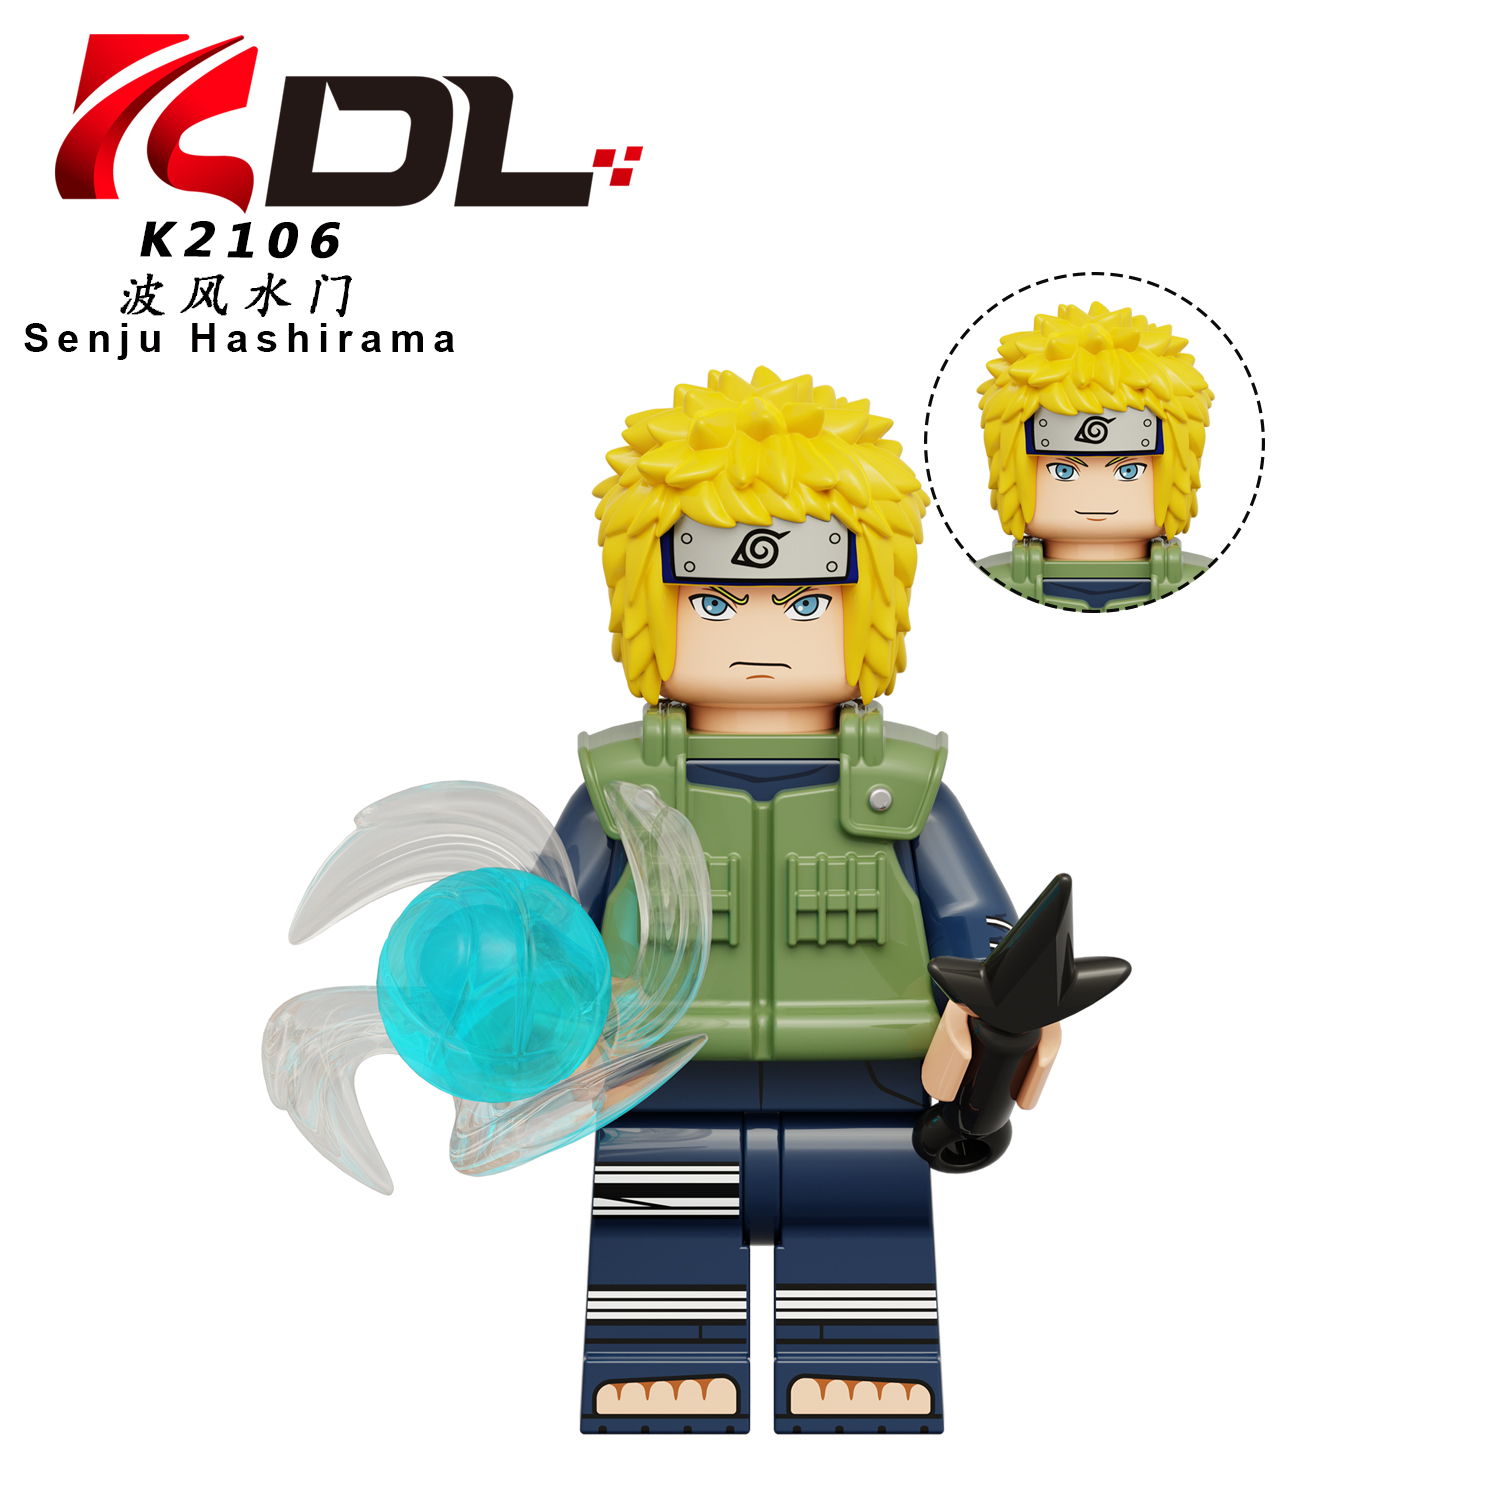 KDL814 K2103 K2104 K2105 K2106 K2107 K2108 K2109 K2110 Naruto Series Building Blocks Action Figures Educational Toys For Kids